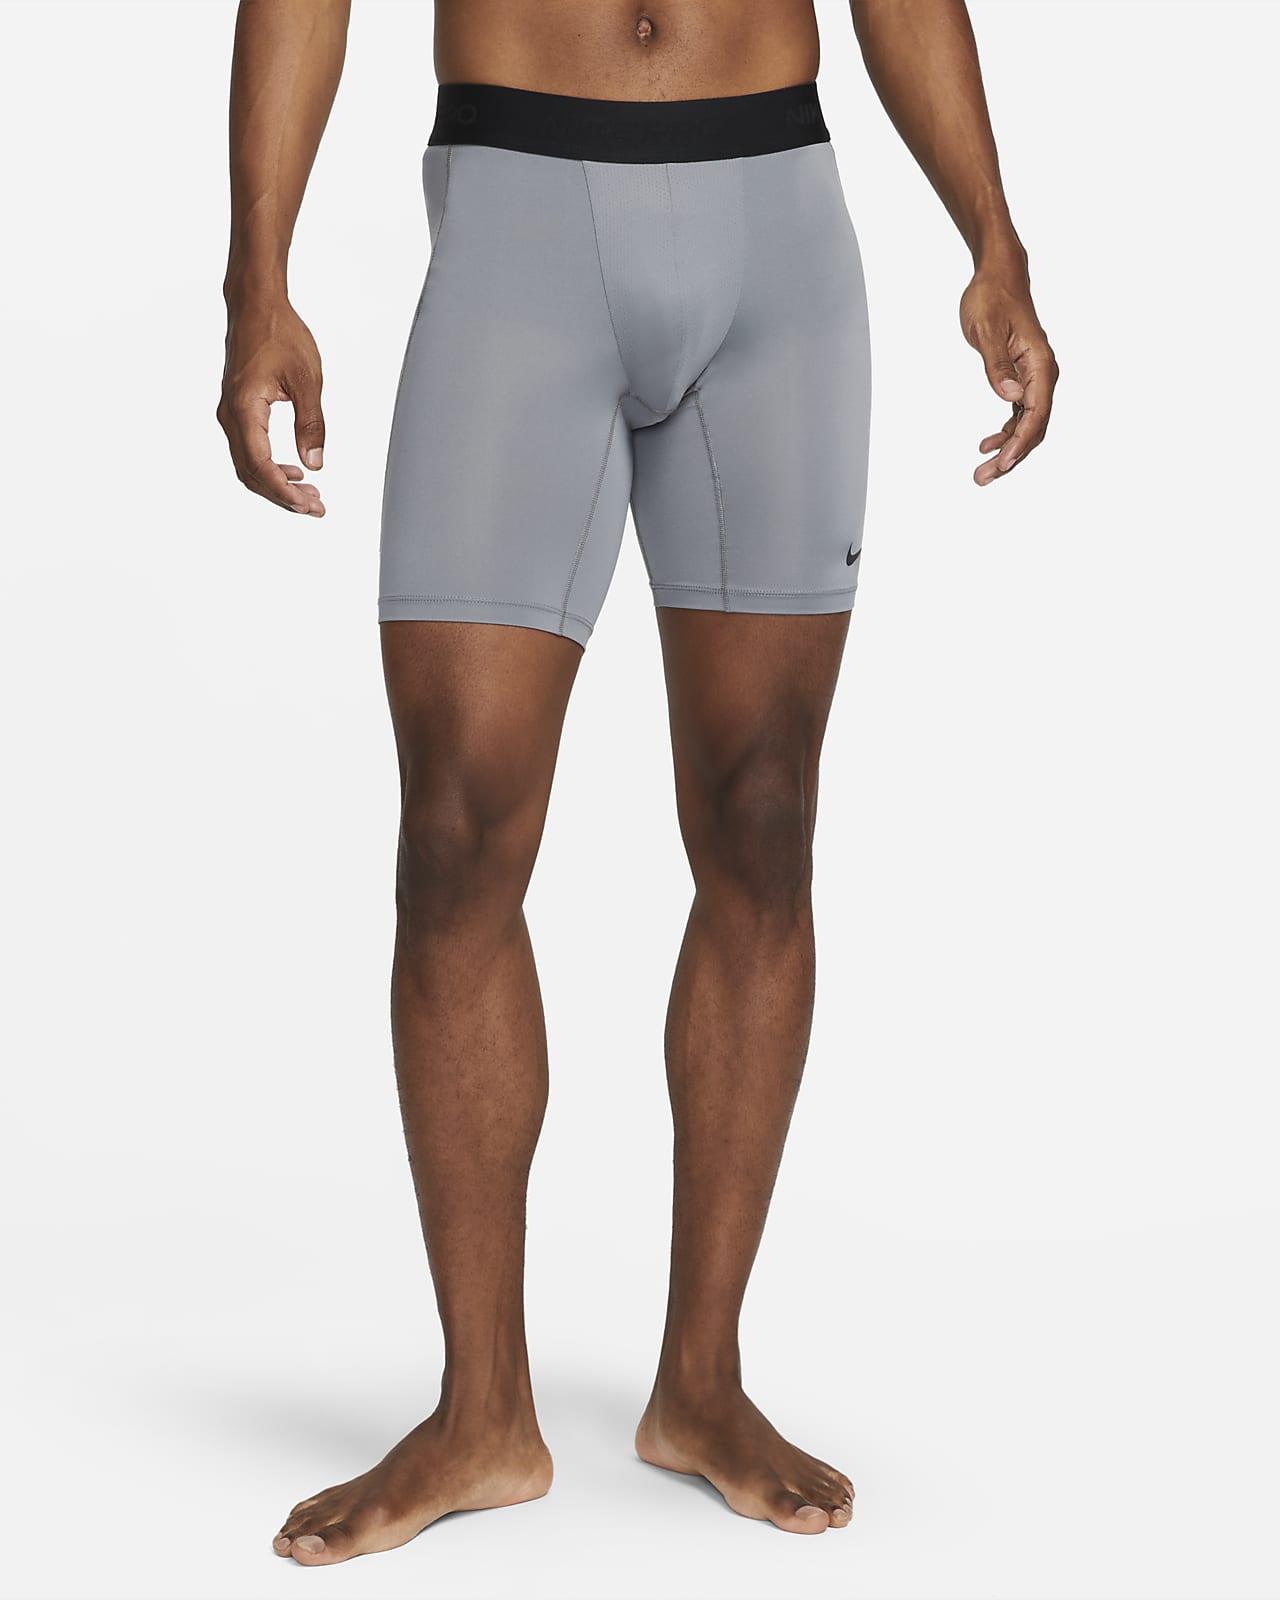 Nike Pro Pantalons curts llargs Dri-FIT de fitnes - Home